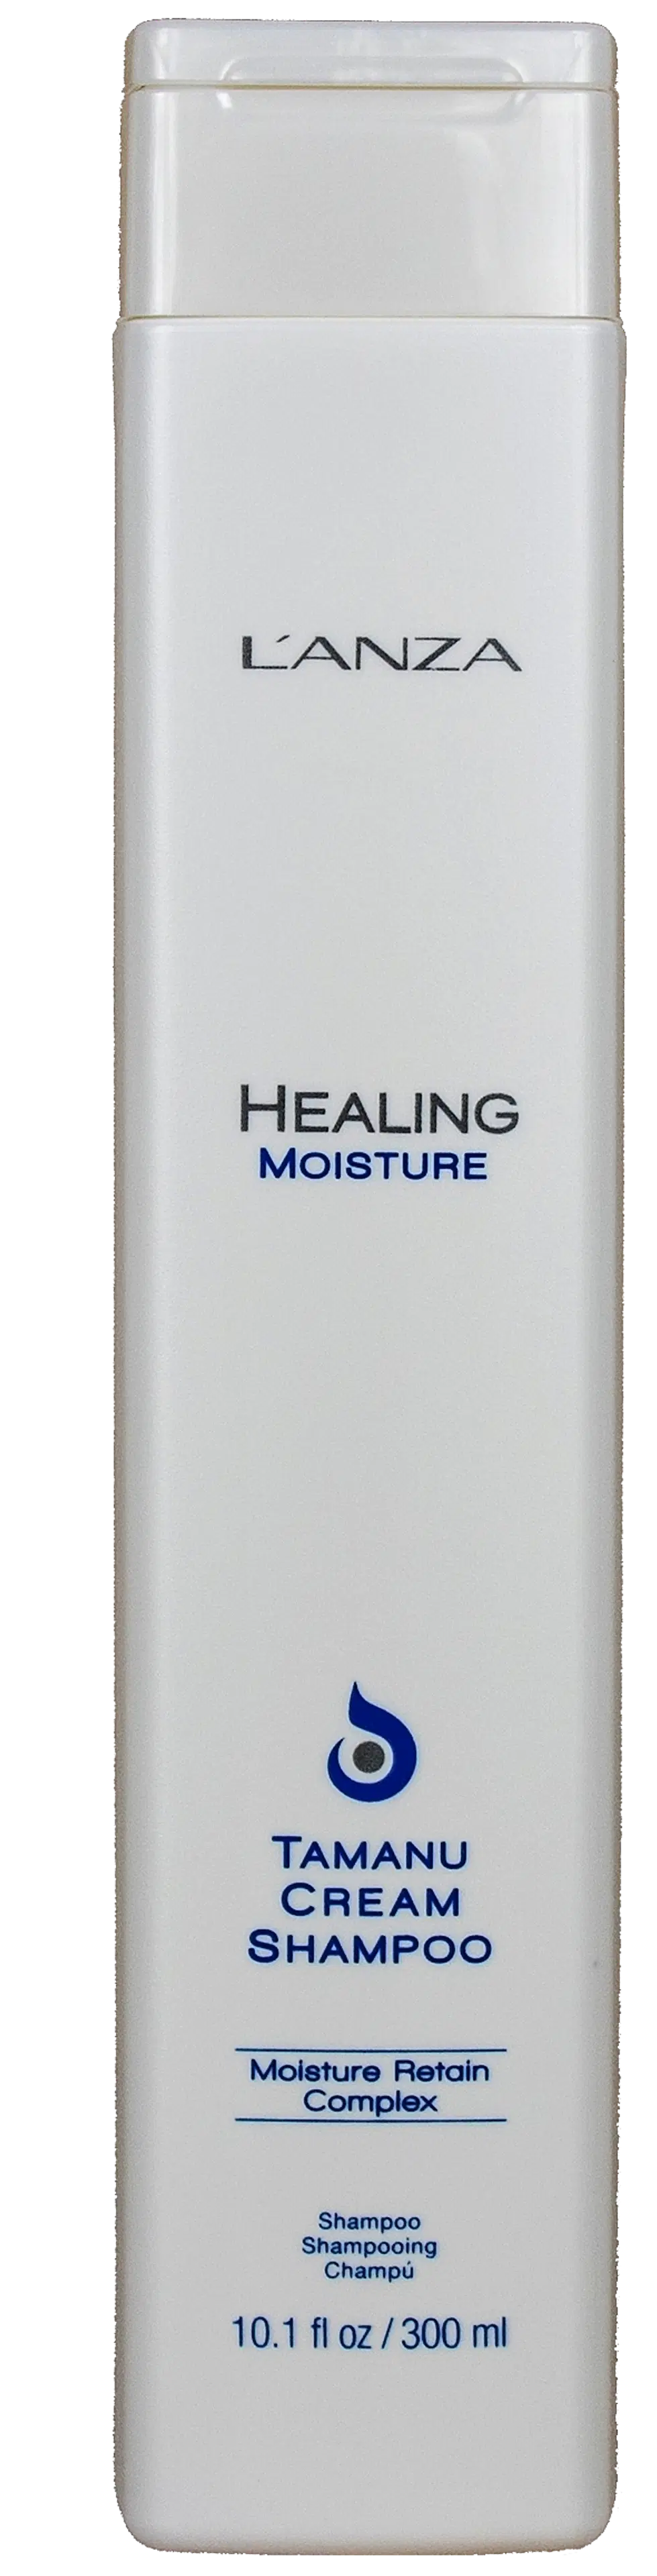 L´ANZA Healing Moisture Tamanu Cream shampoo 300 ml